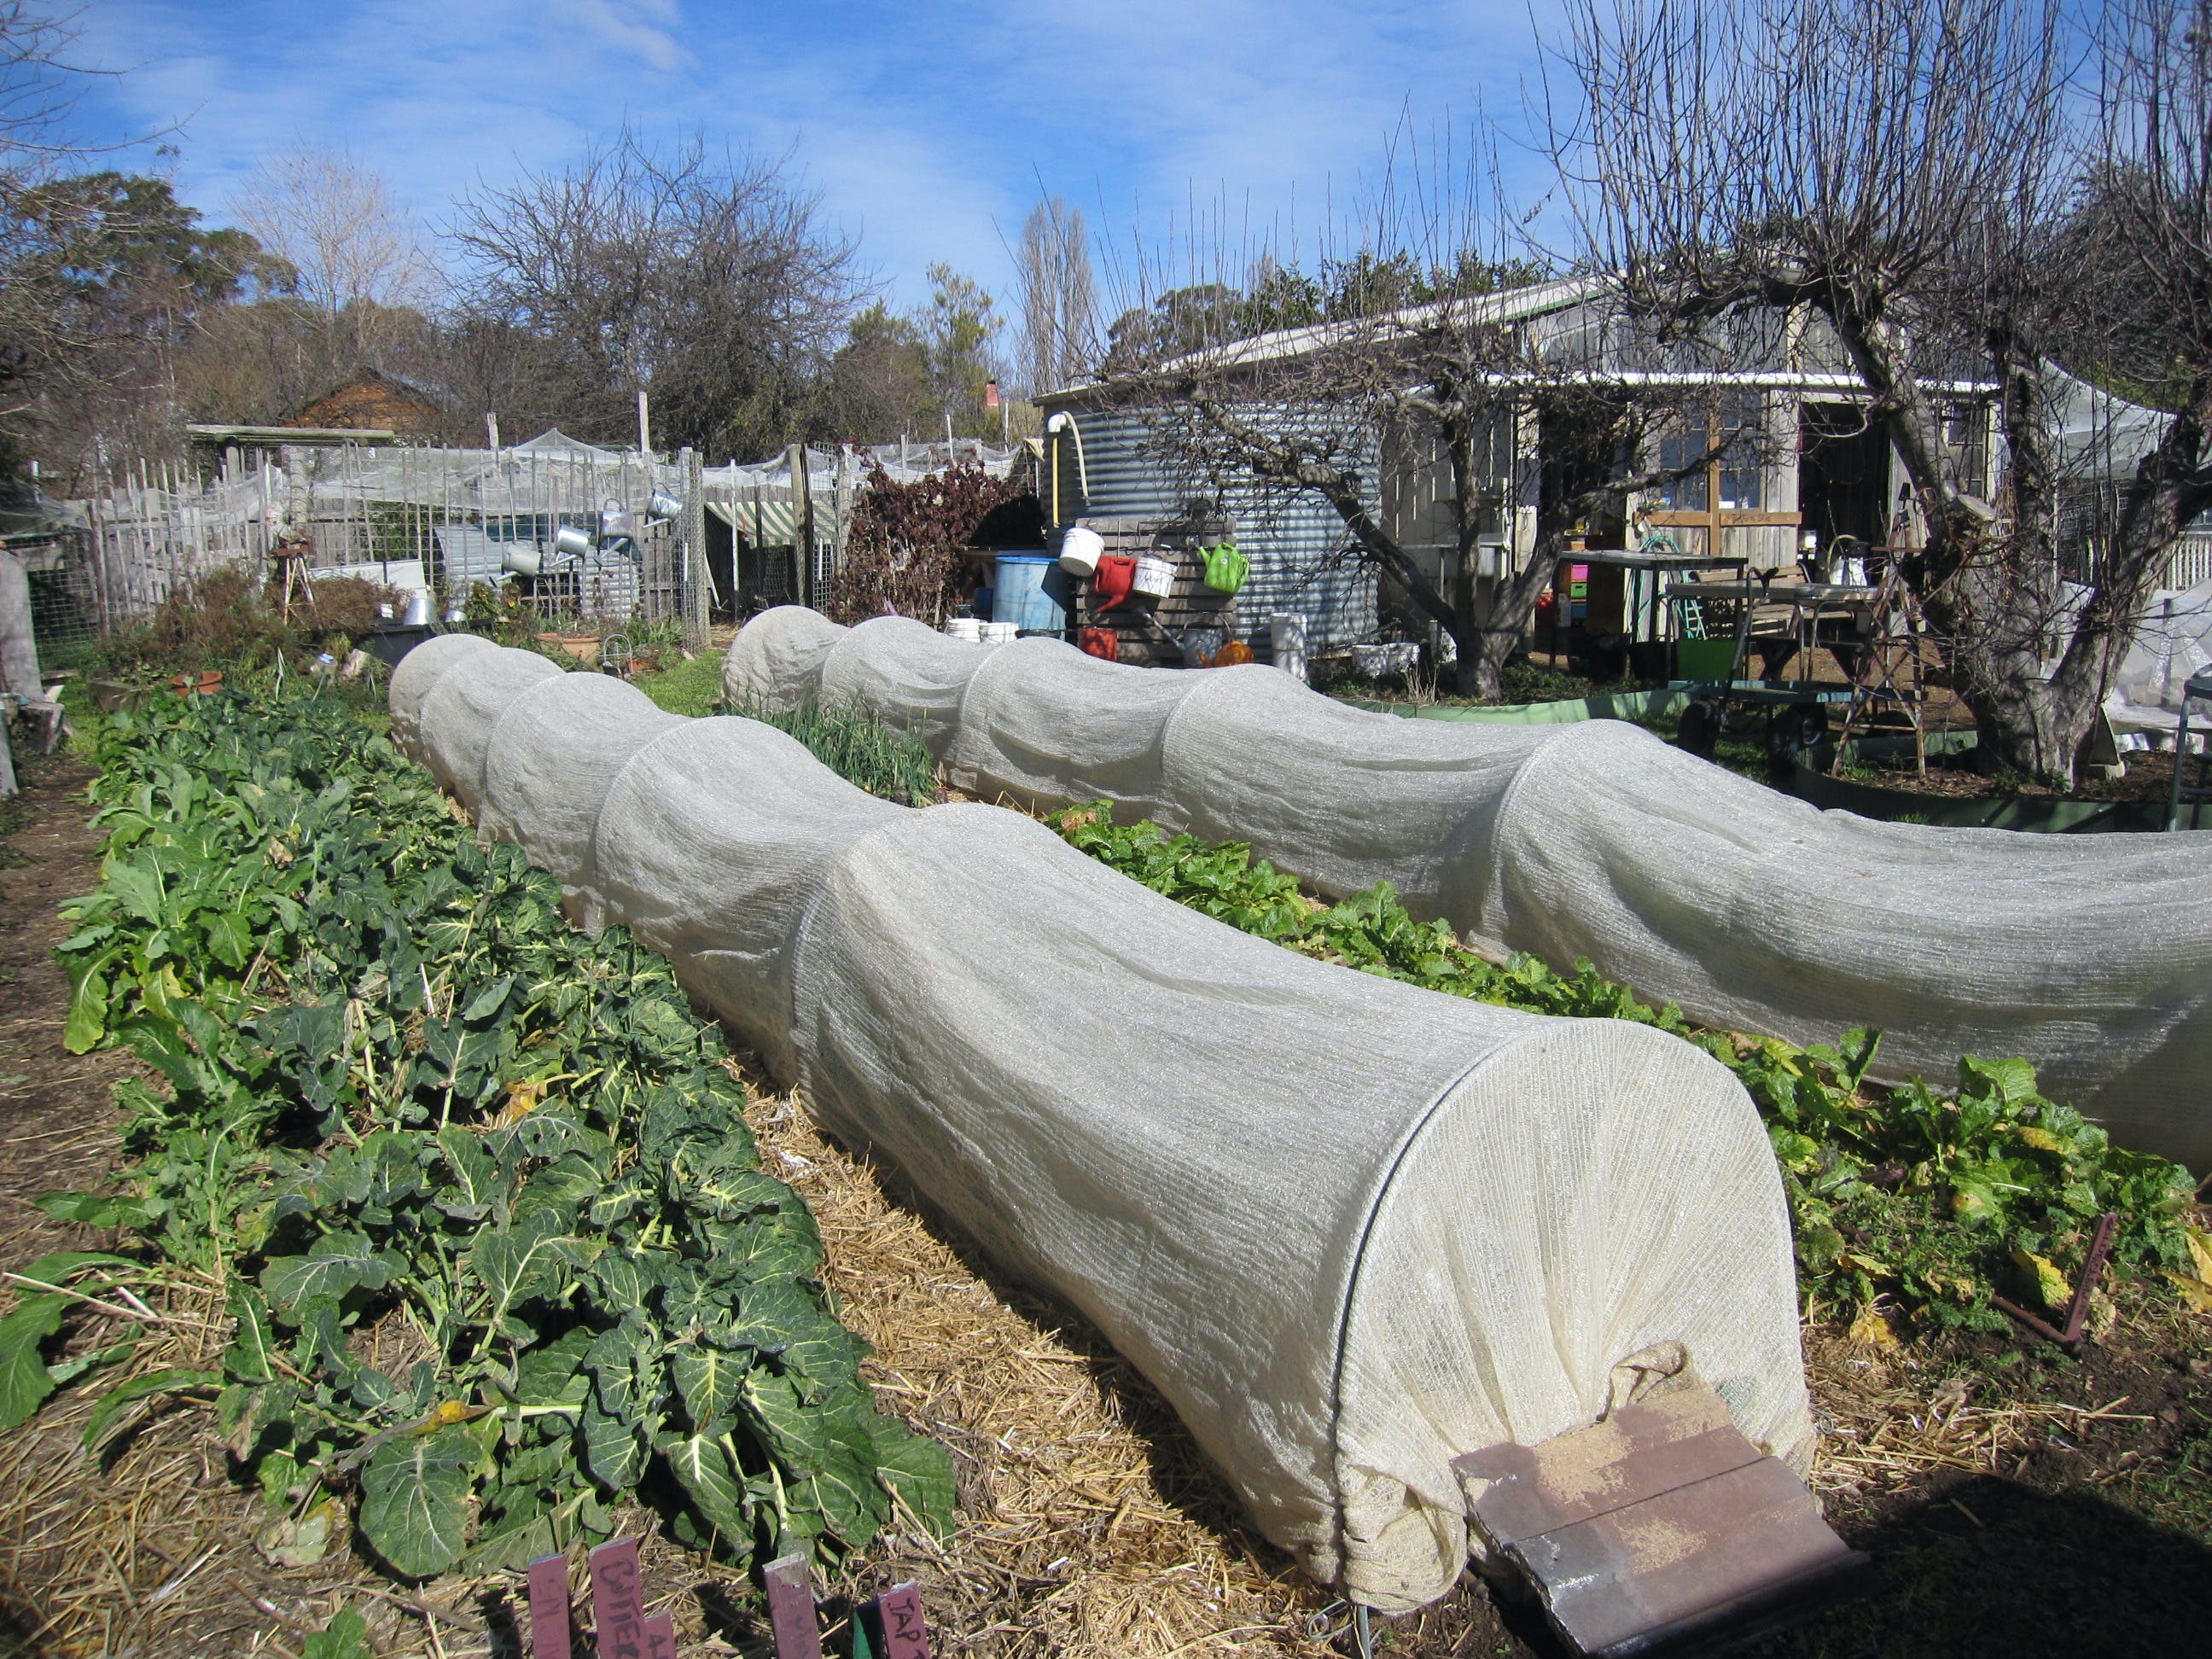 Wynlen House Tour a Unique Urban Regenerative Farm and Market Garden - Accommodation Bookings